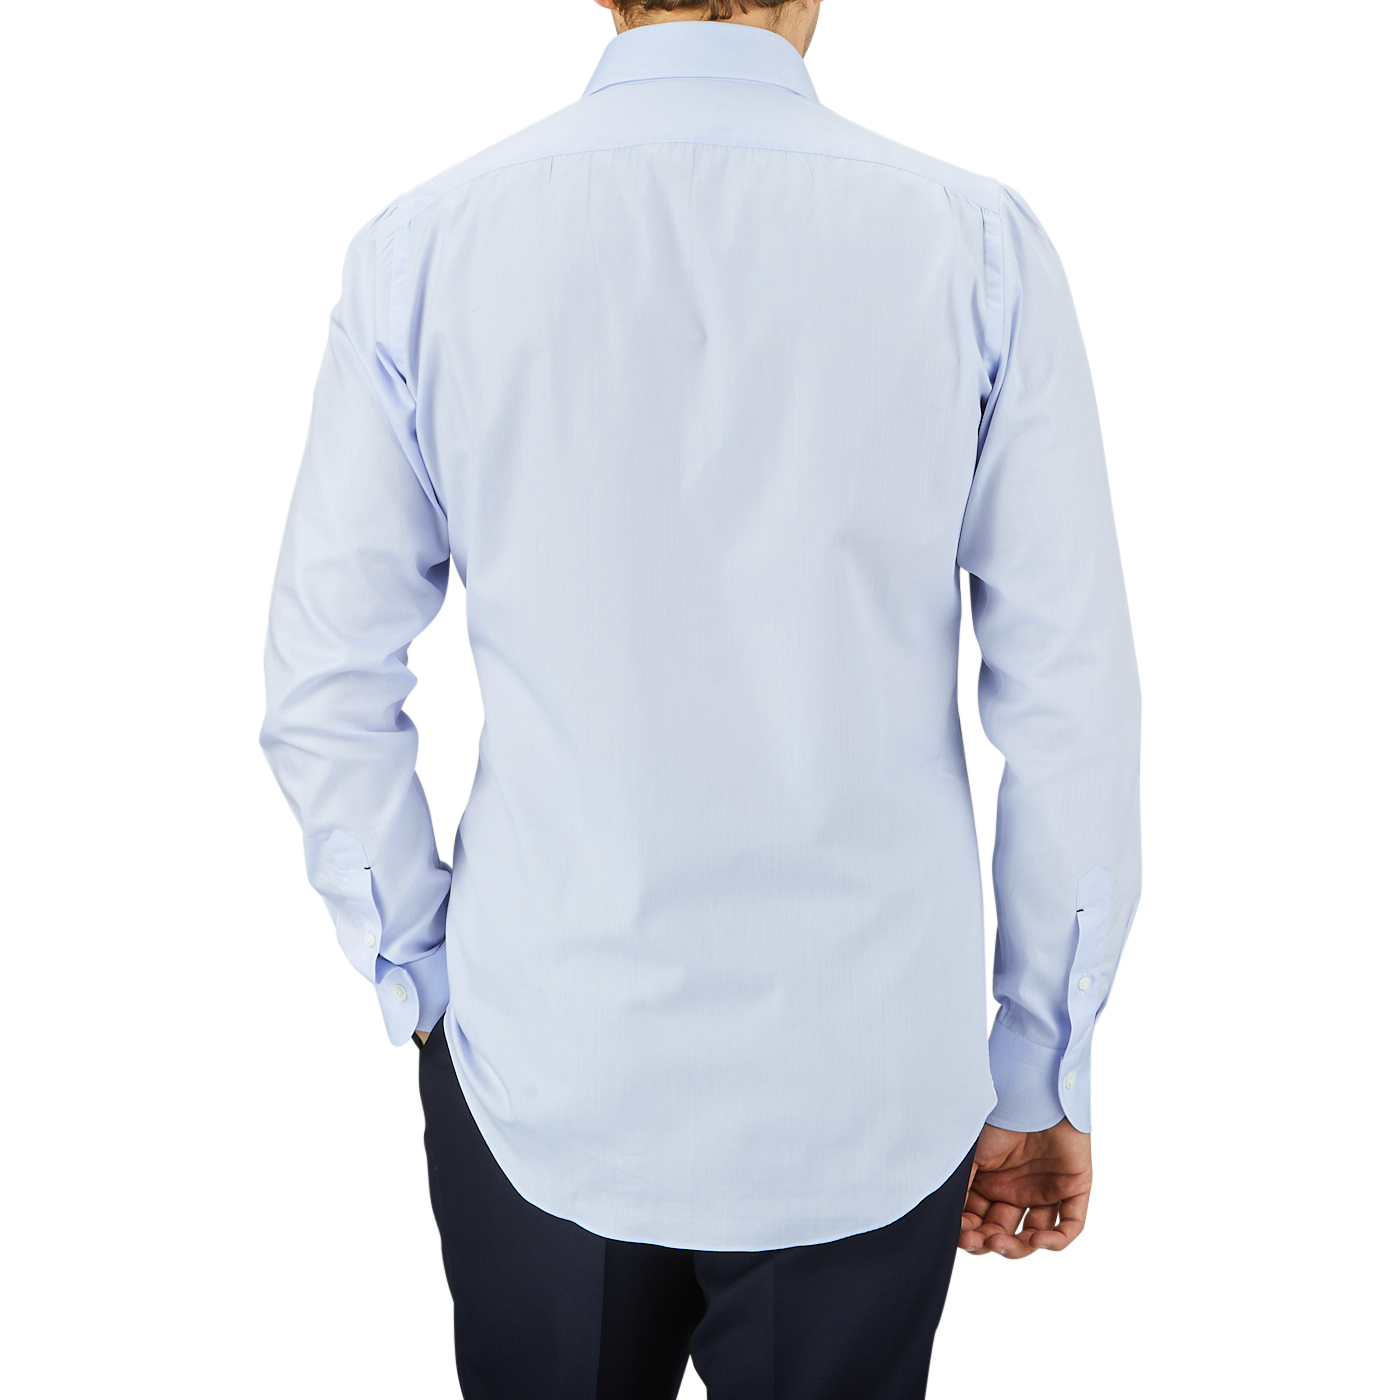 A man seen from behind, wearing a light blue Mazzarelli Light Blue Slim Cutaway Herringbone Shirt and dark trousers, standing against a grey background.